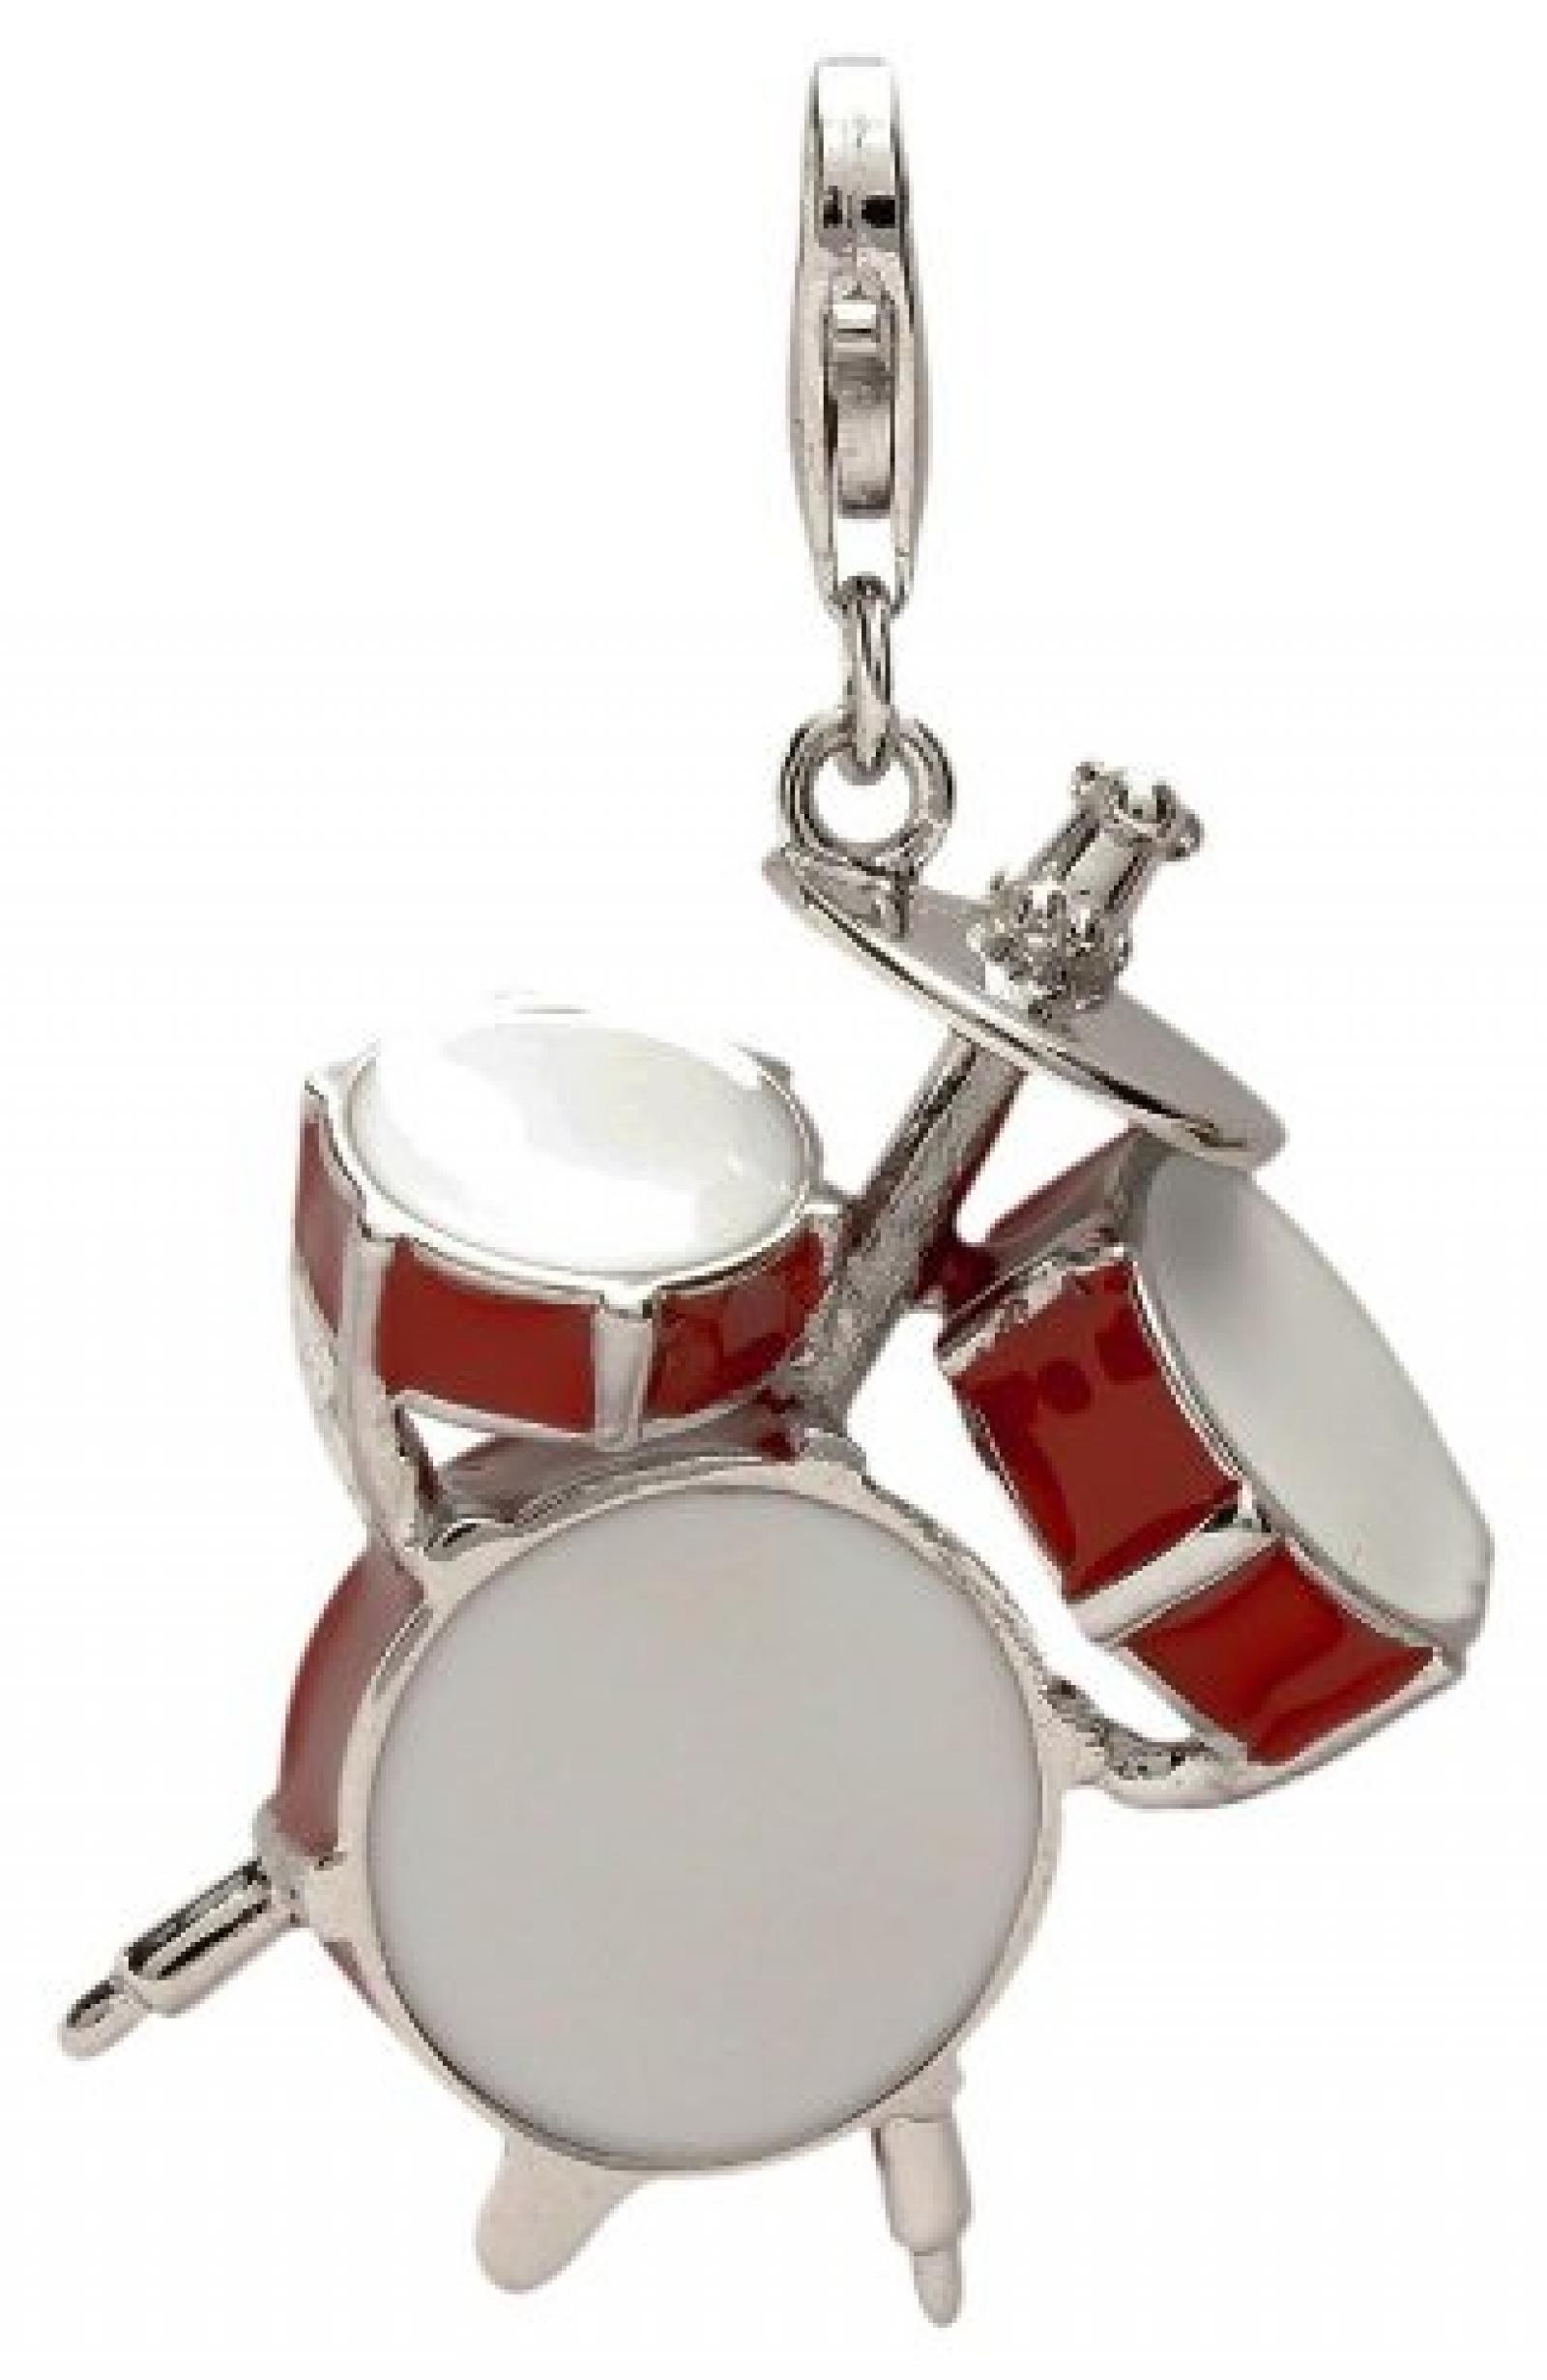 Rafaela Donata Charm Collection Damen-Charm Schlagzeug 925 Sterling Silber Emaille rot / weiß  60602083 